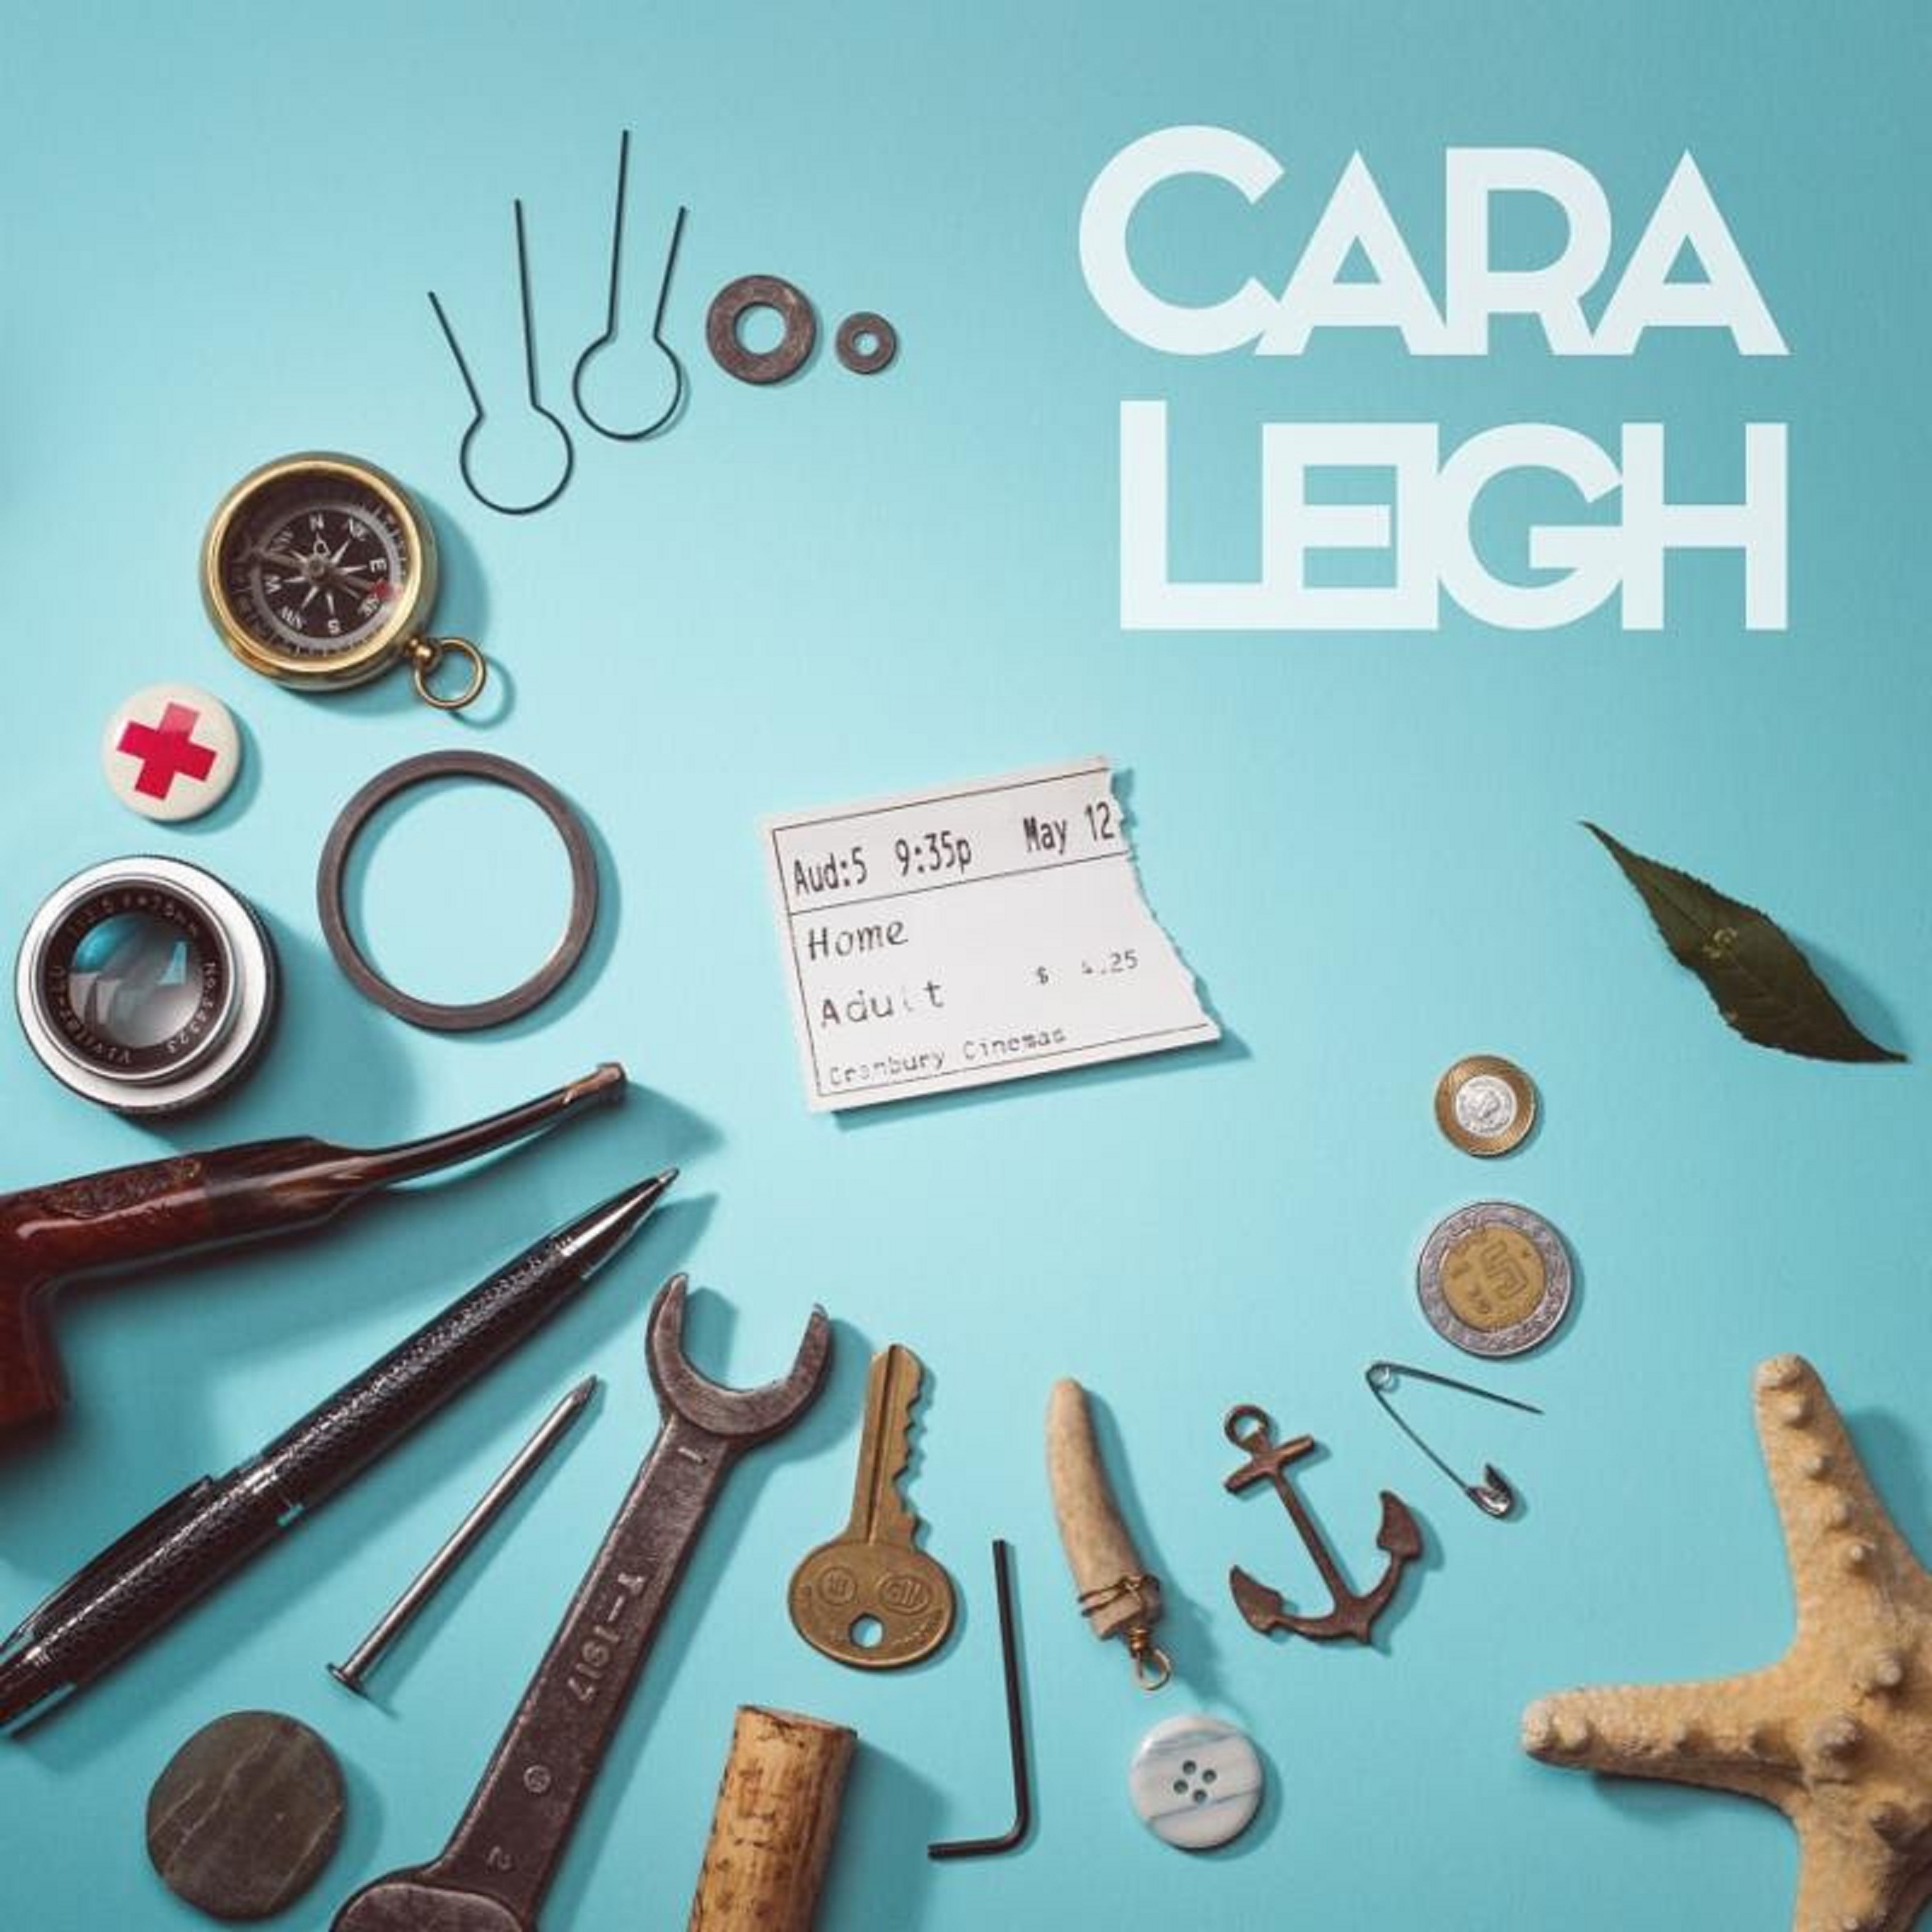 Singer/Songwriter Cara Leigh's 'Home' EP